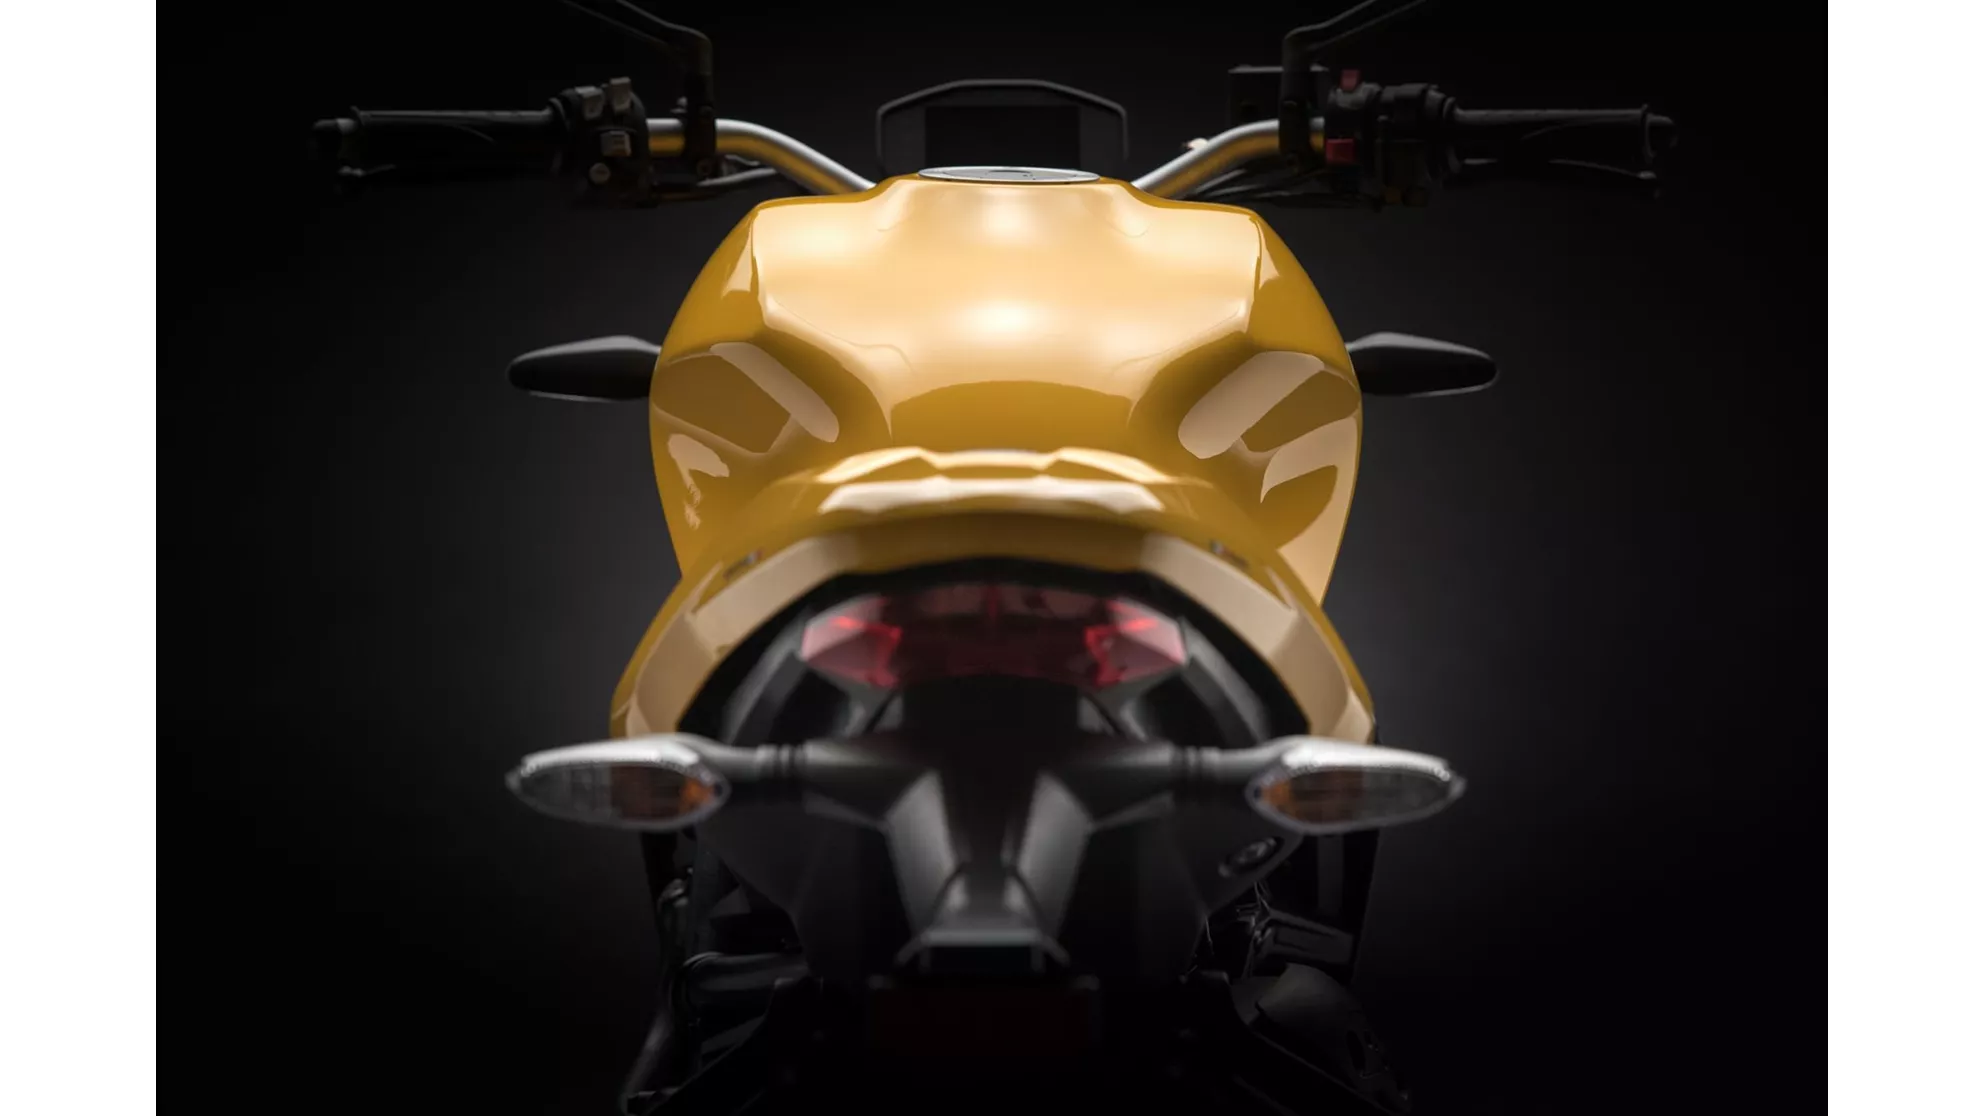 Ducati Monster 821 - Image 24